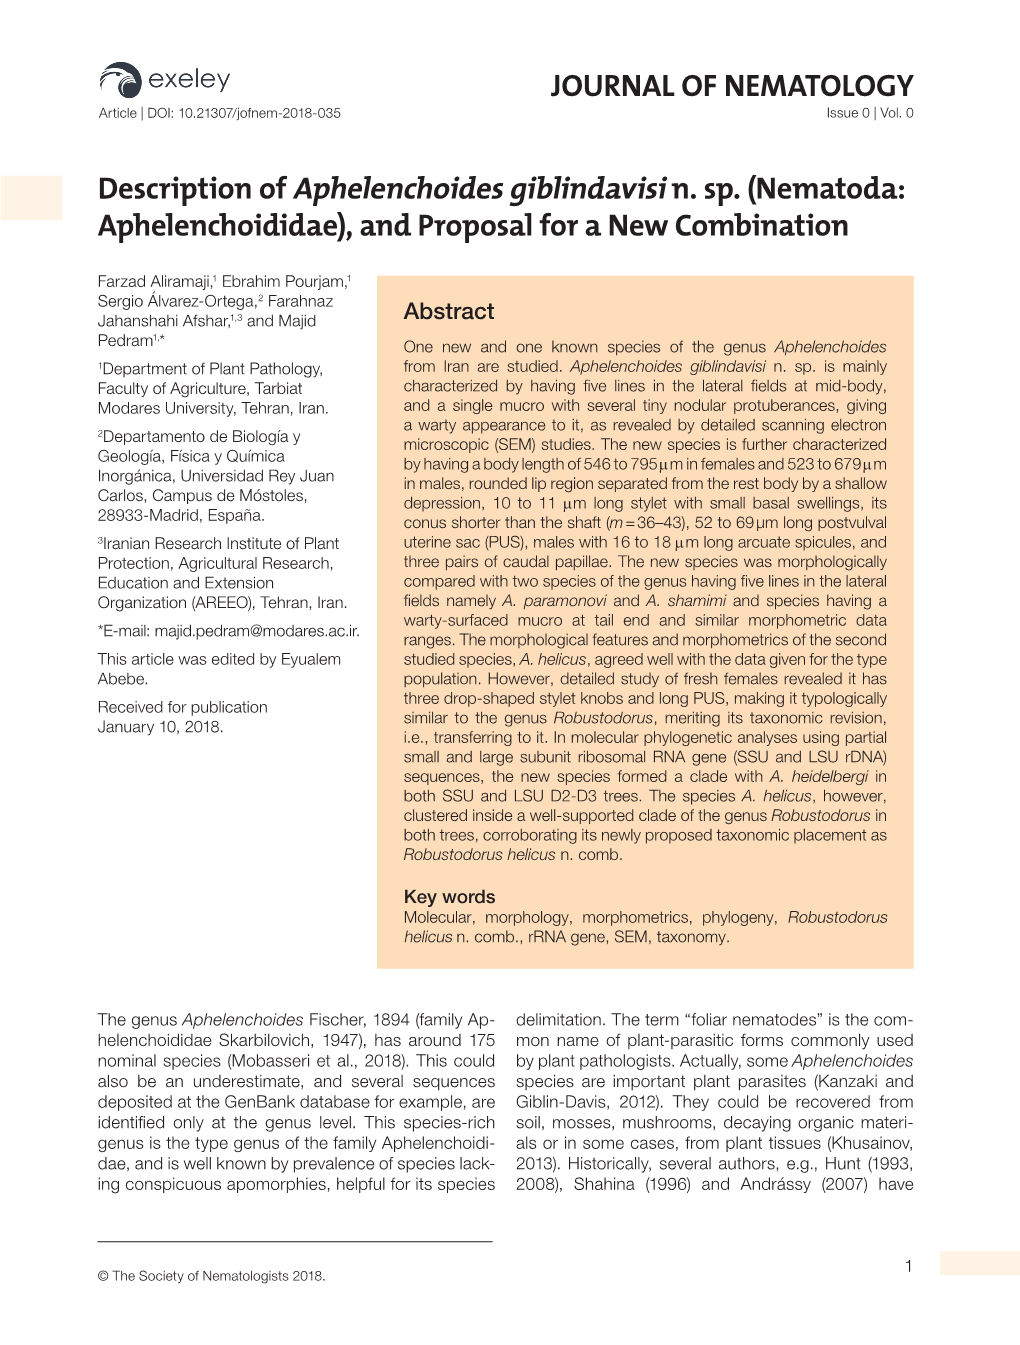 JOURNAL of NEMATOLOGY Description of Aphelenchoides